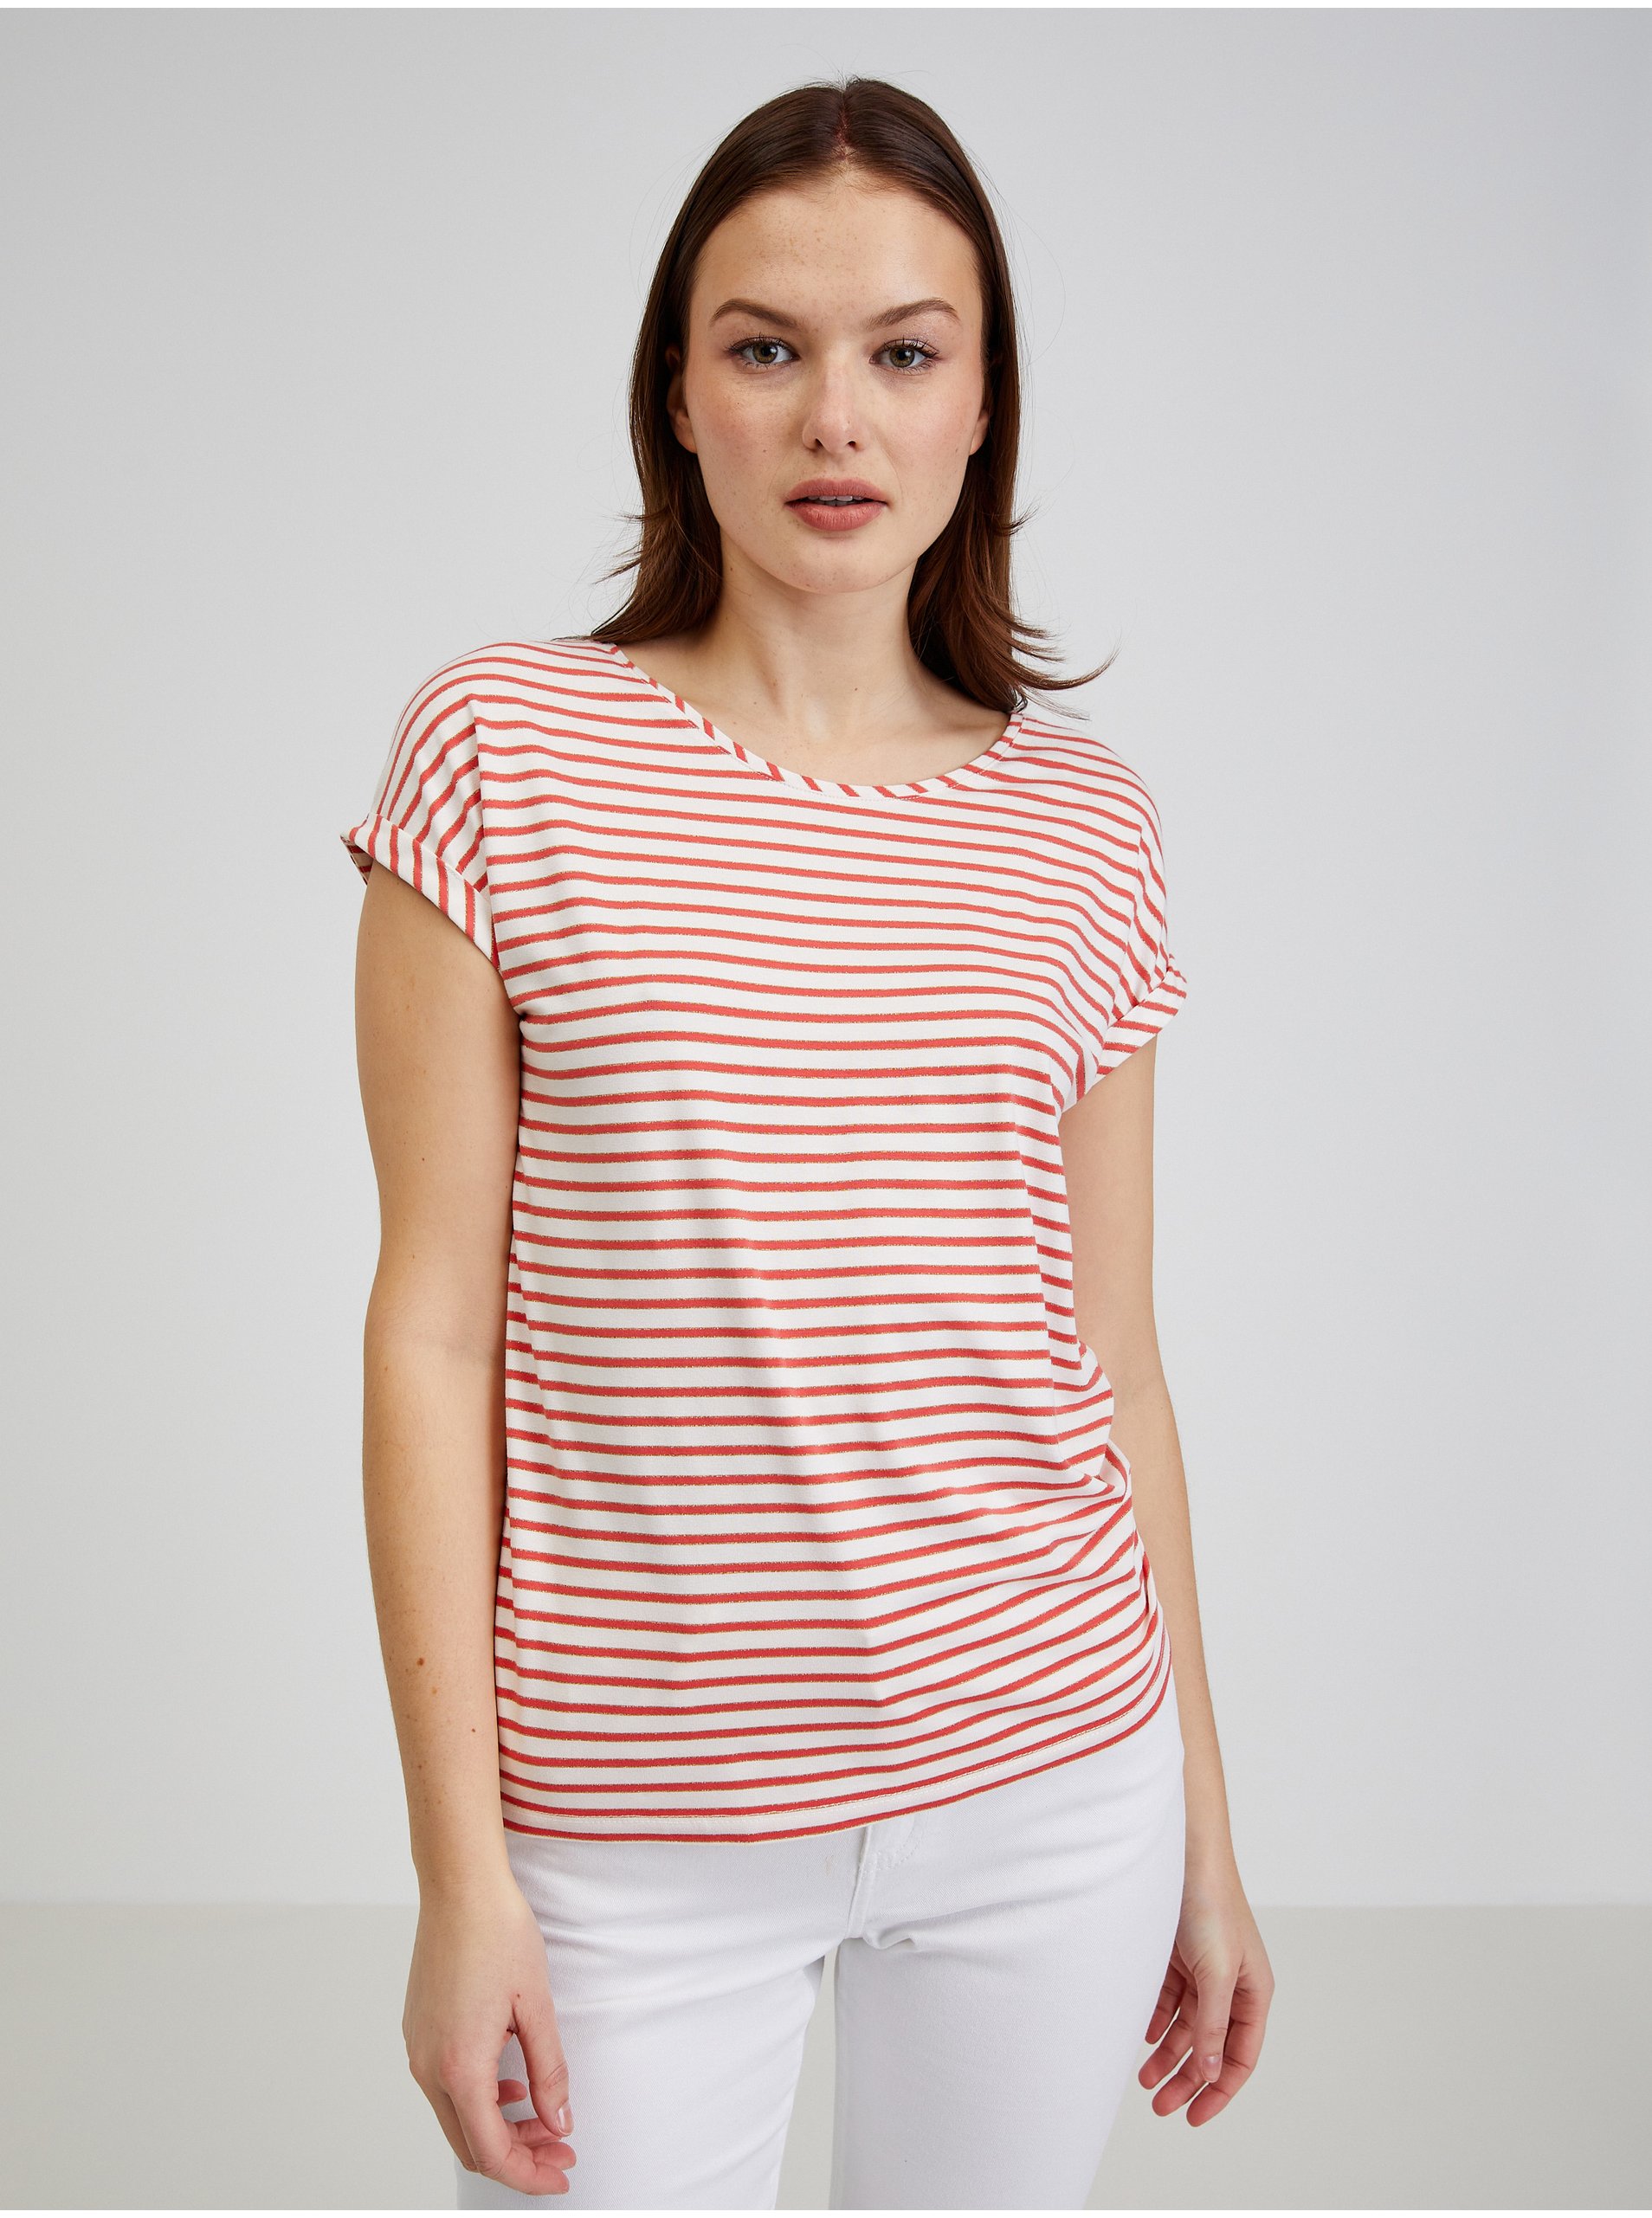 Lacno Červeno-biele dámske pruhované tričko ORSAY